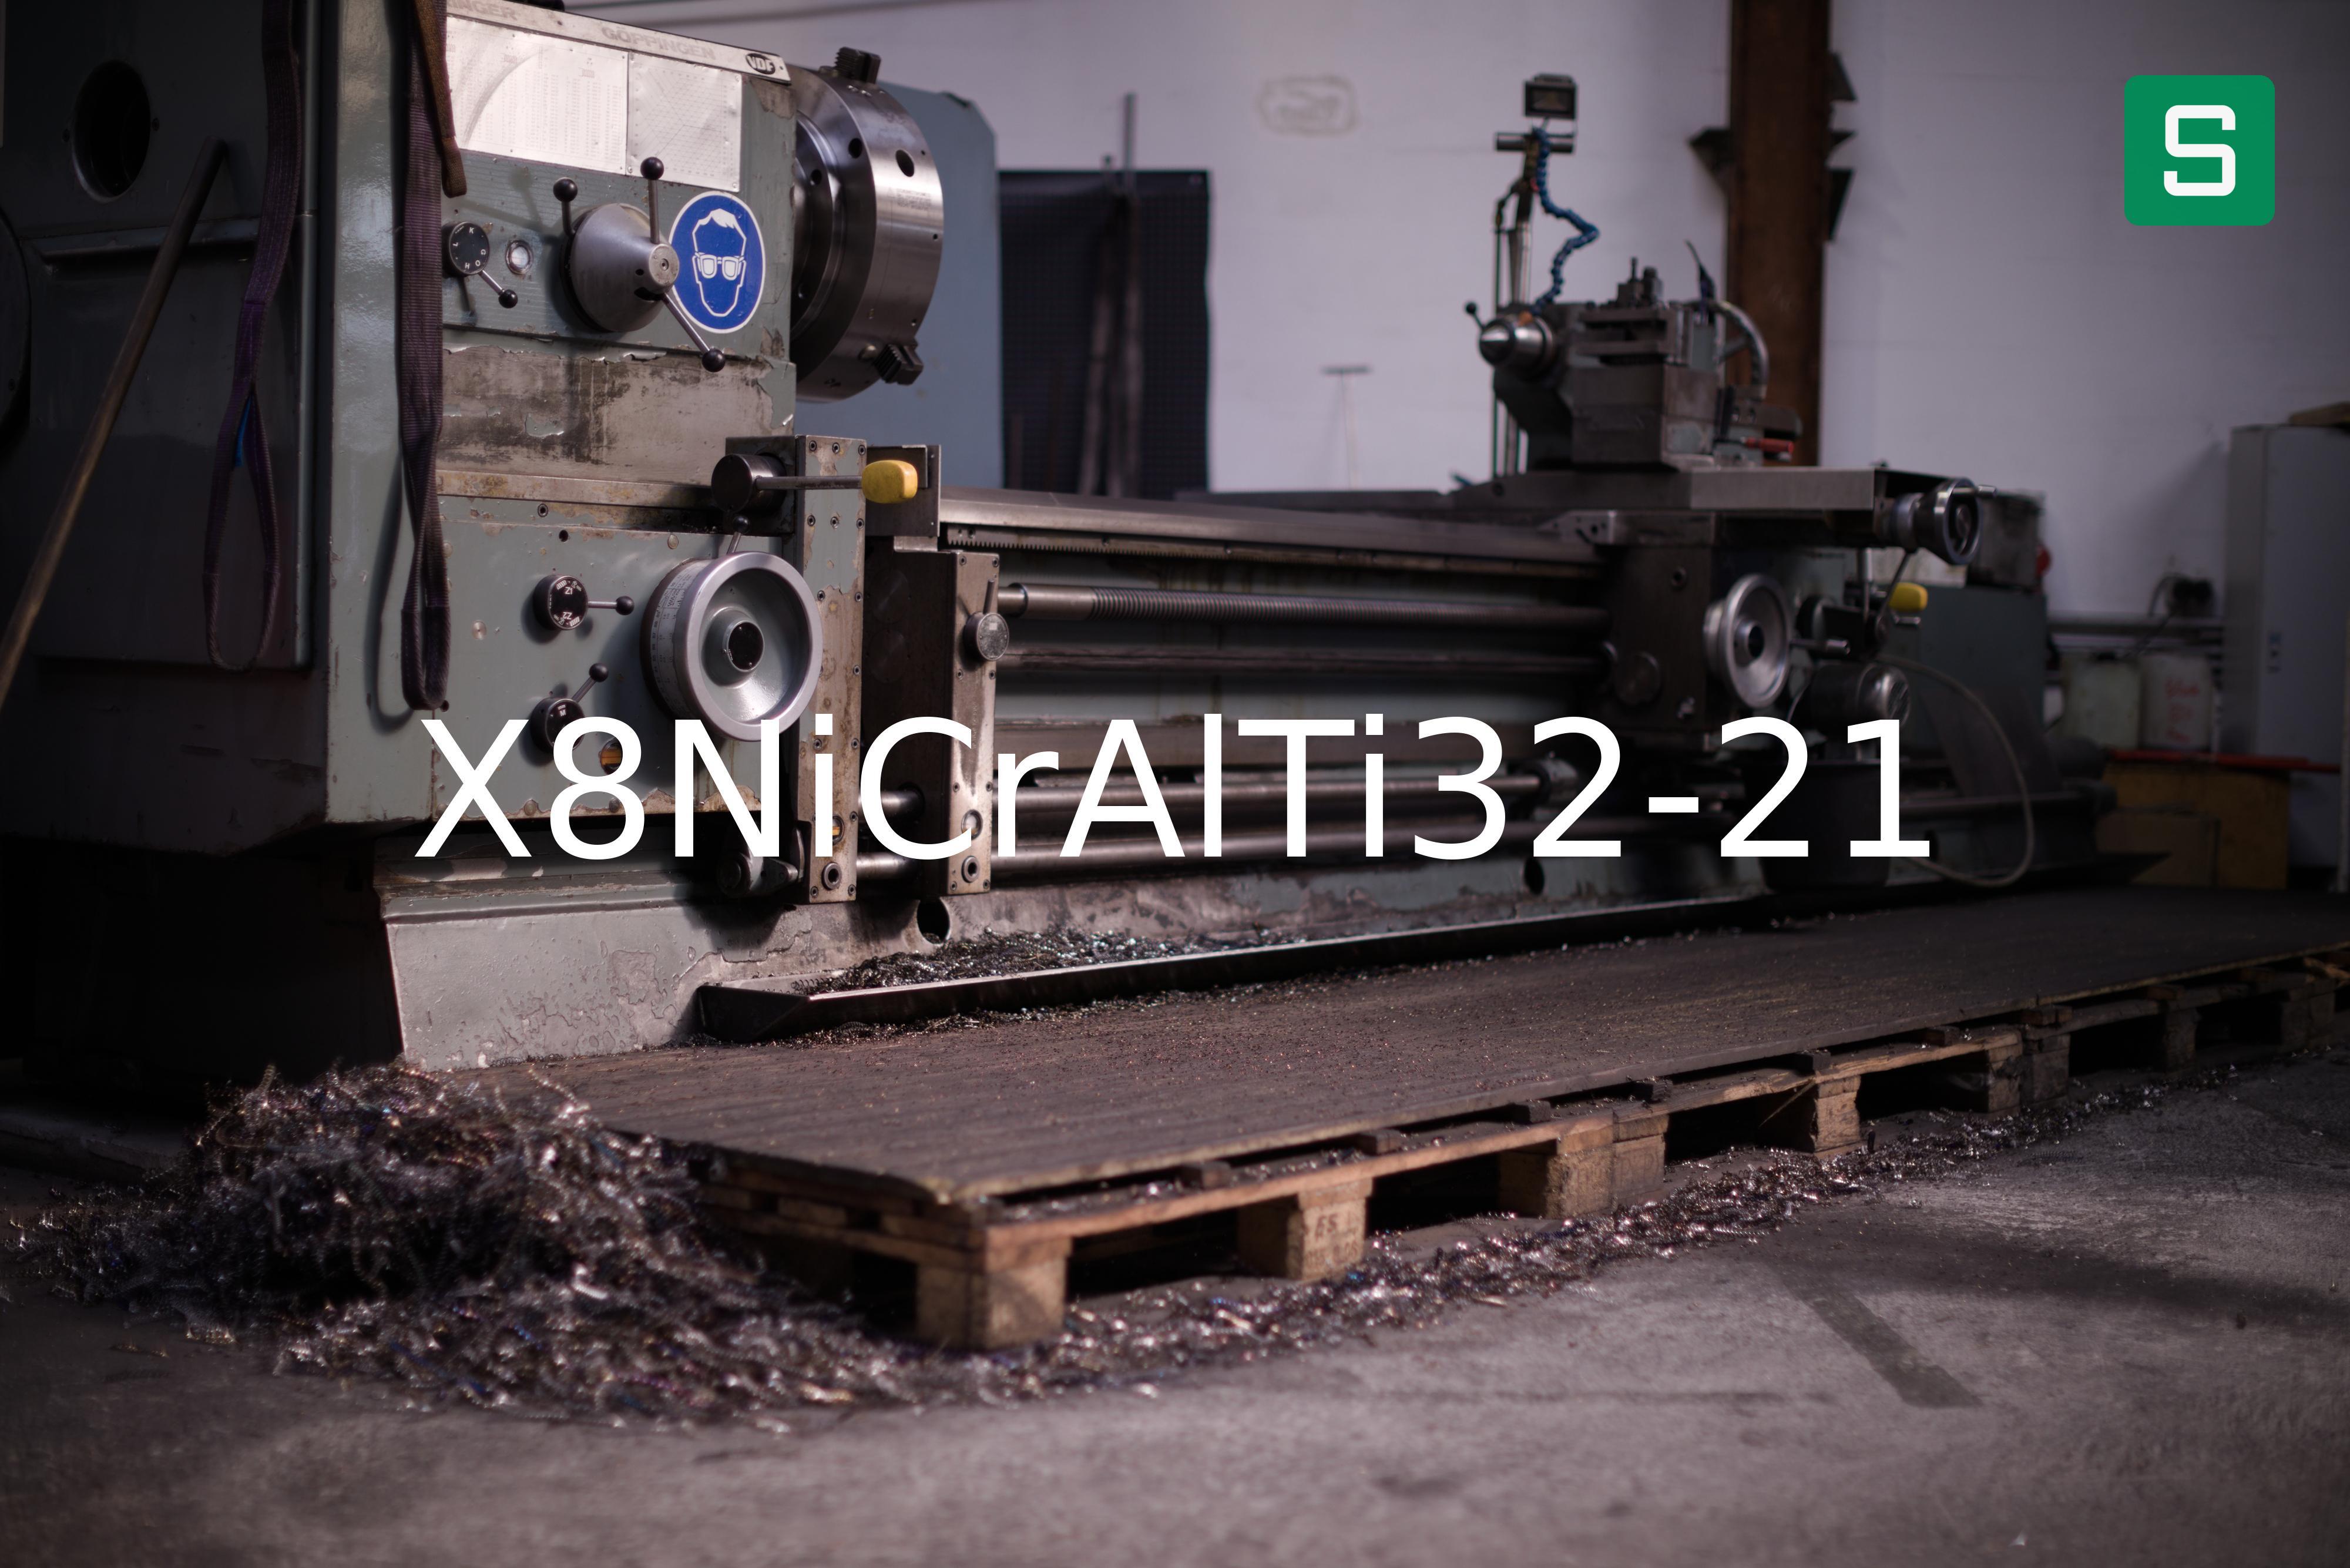 Material de Acero: X8NiCrAlTi32-21